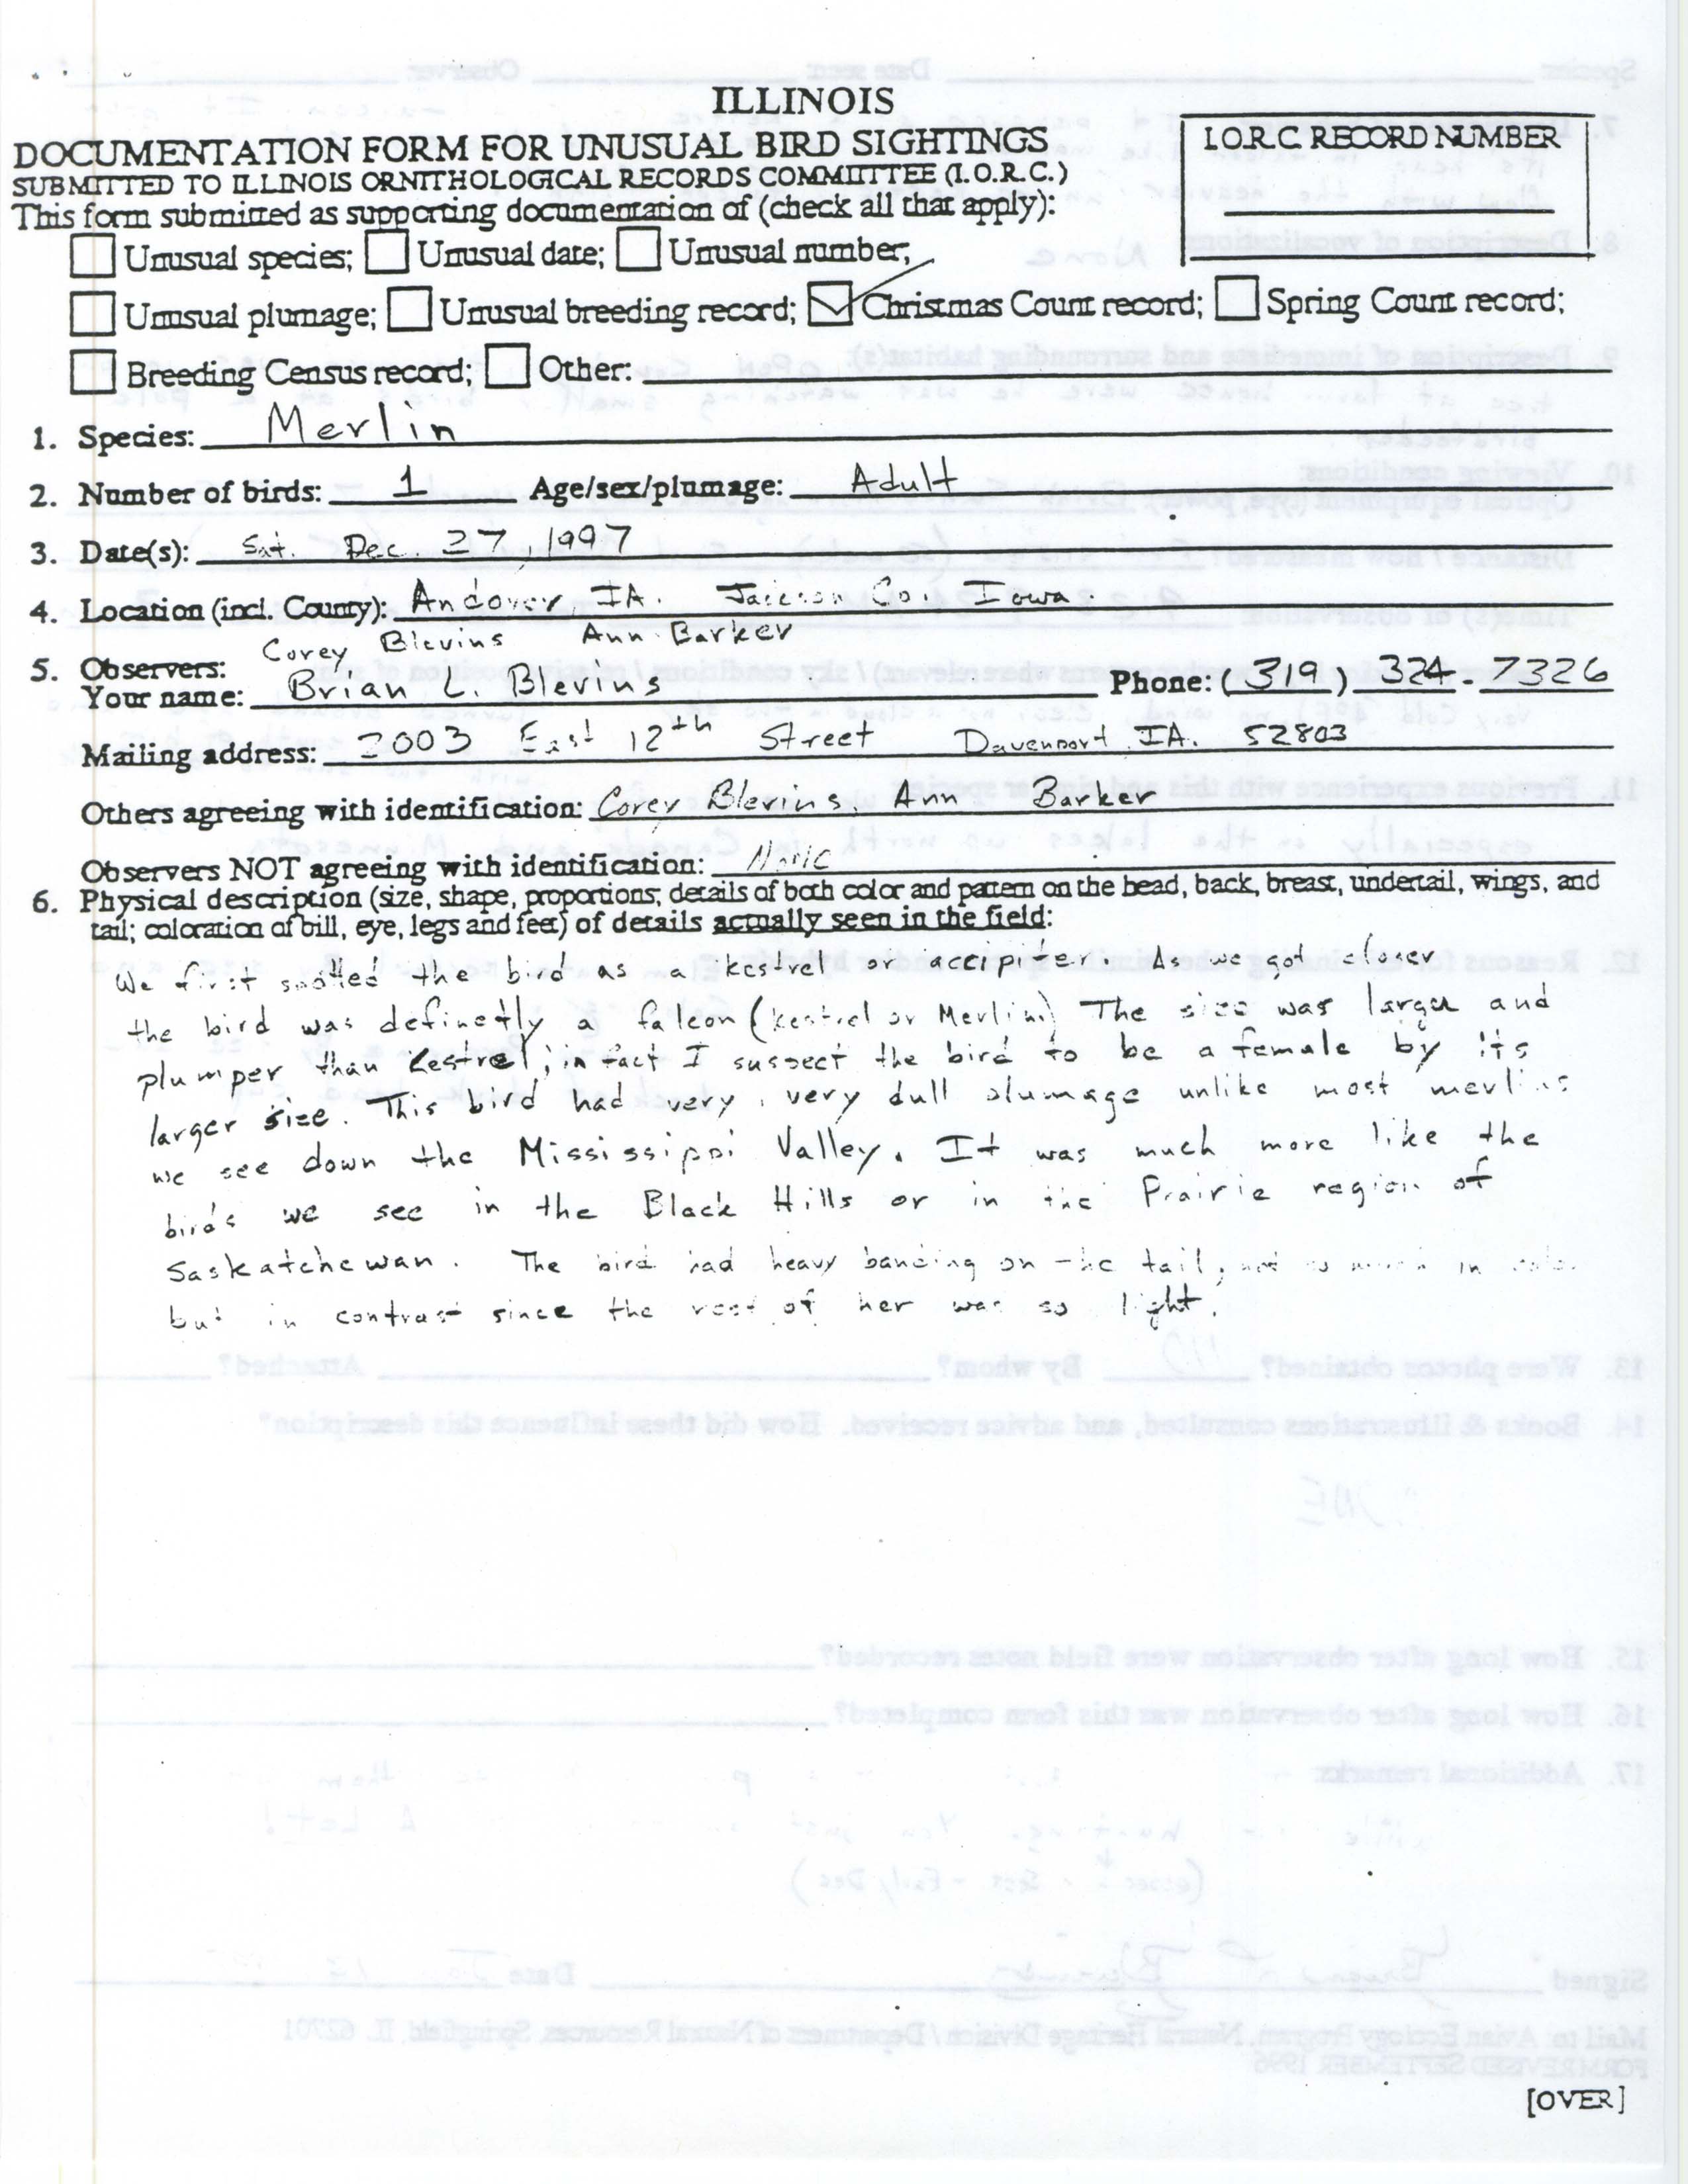 Rare bird documentation form for Merlin at Andover, 1997